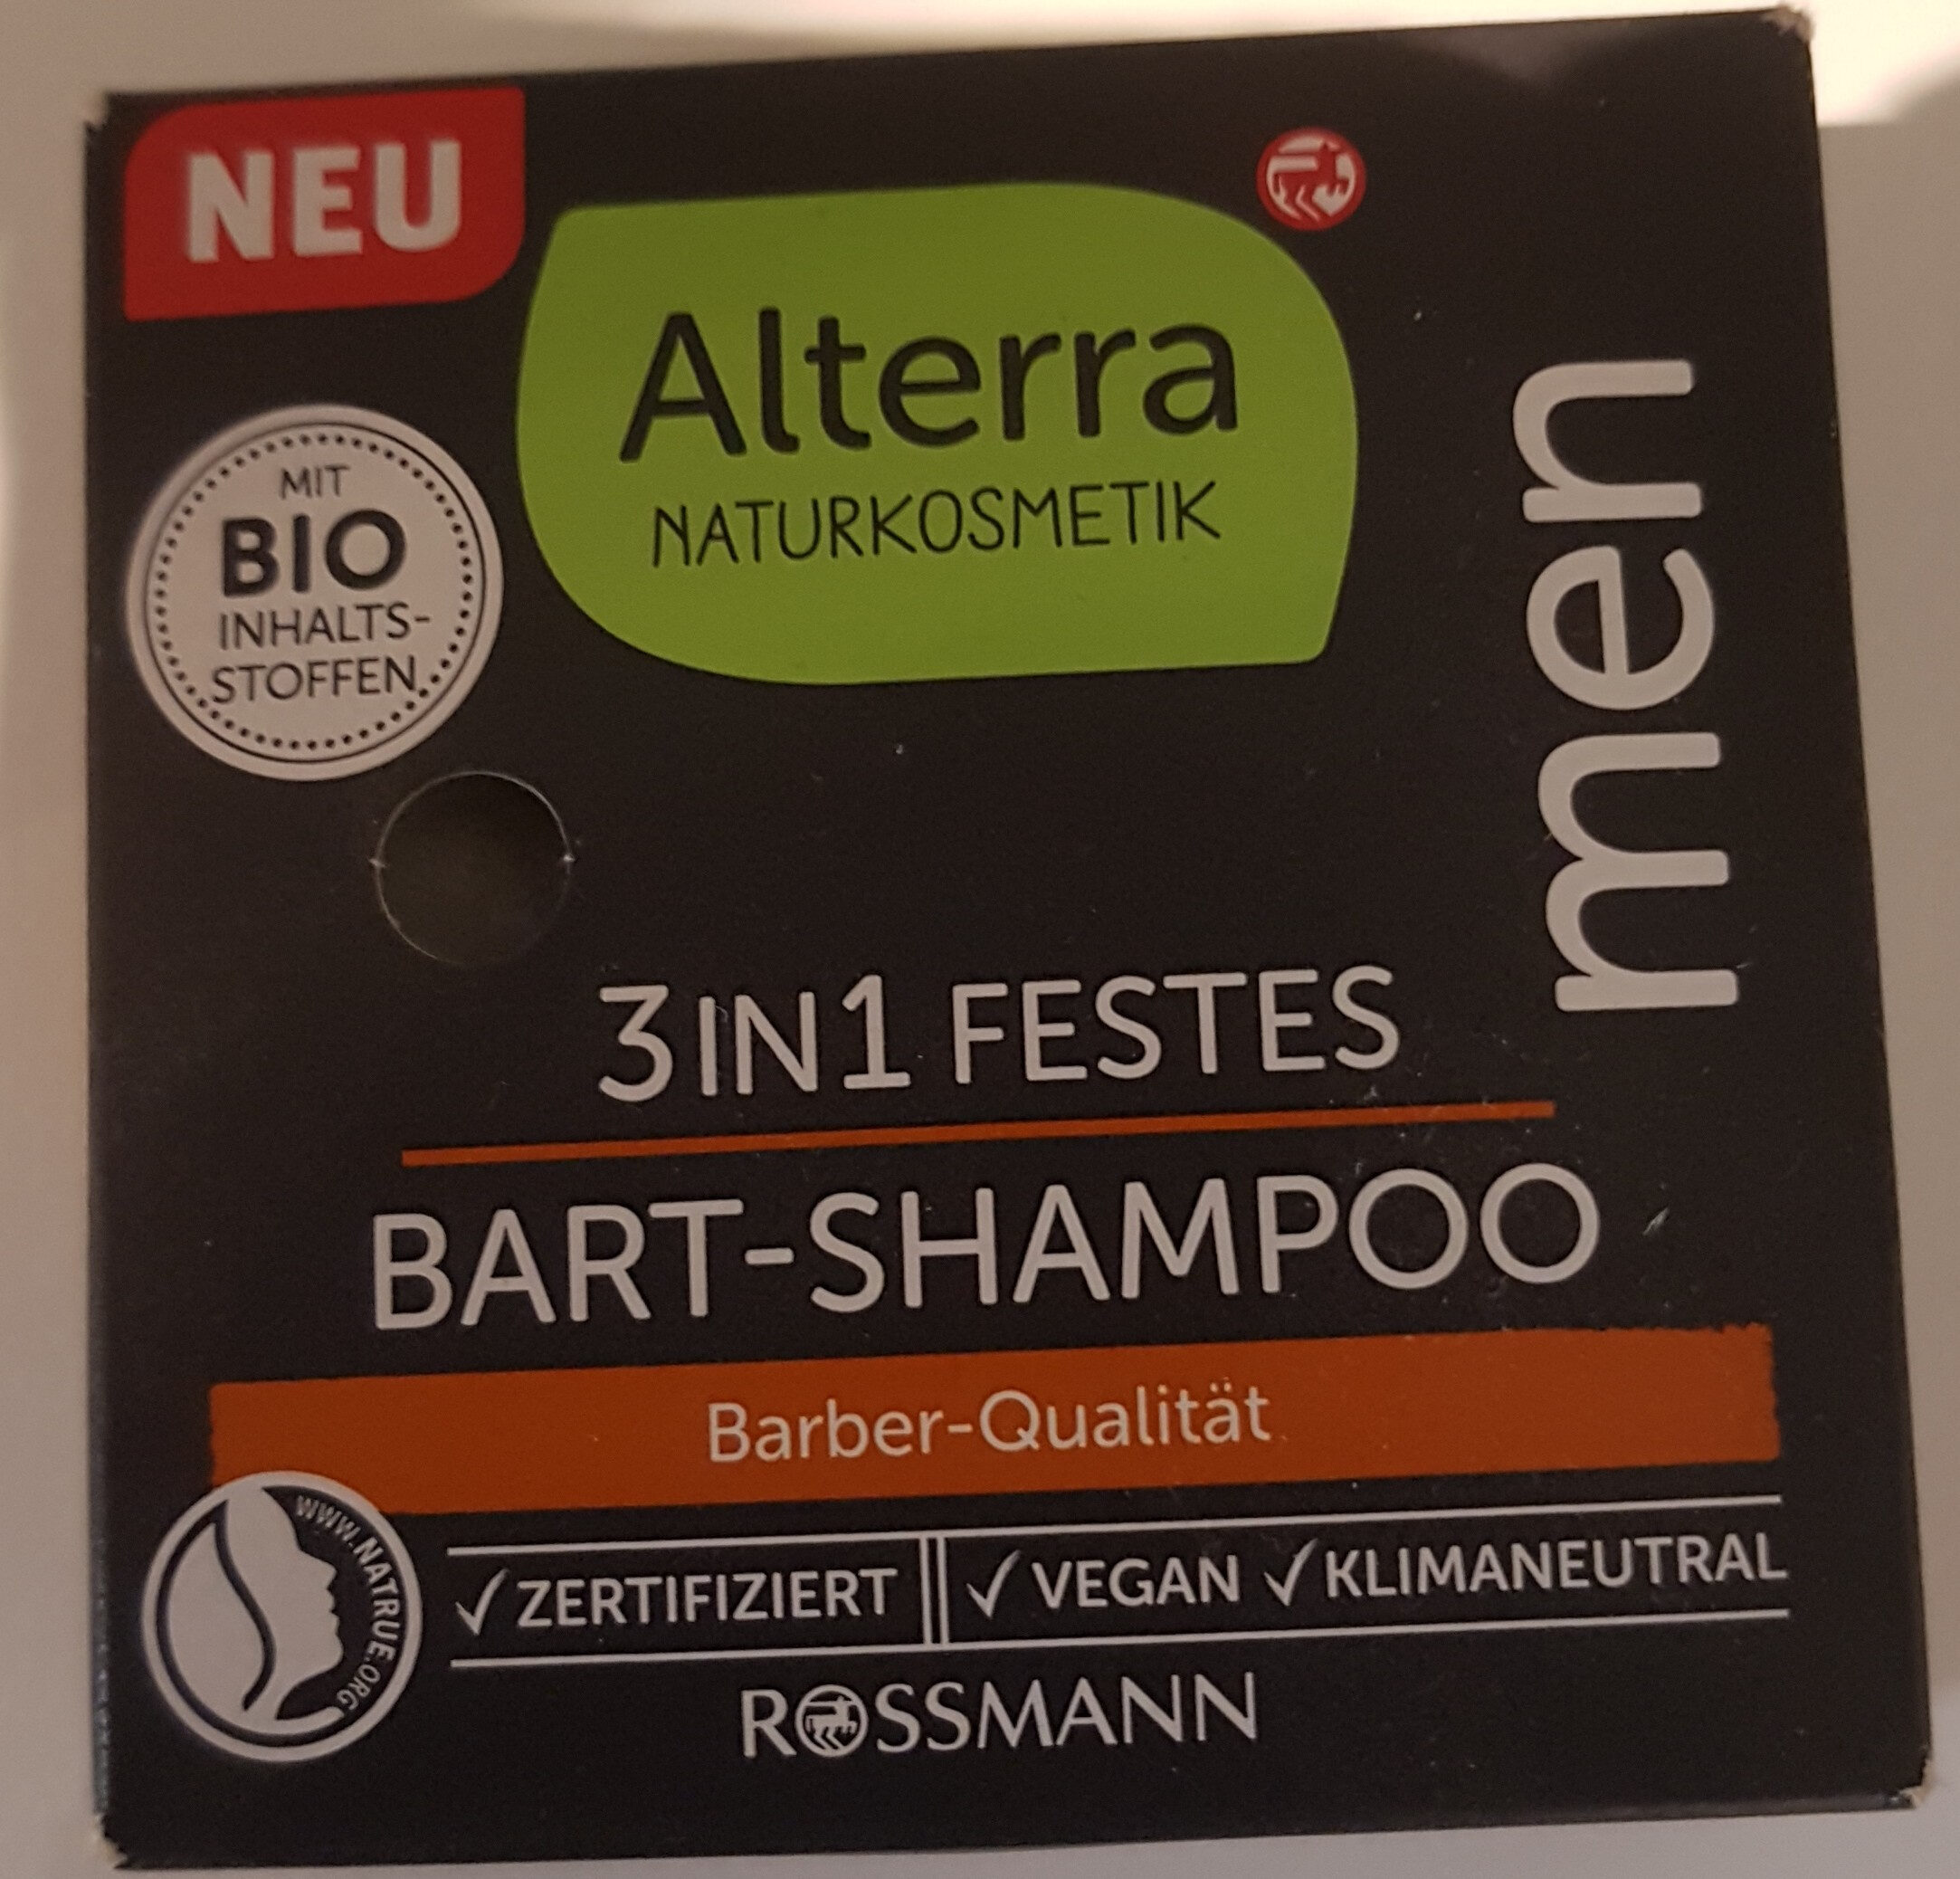 Alterra 3in1 festes Bart-Shampoo - Product - de